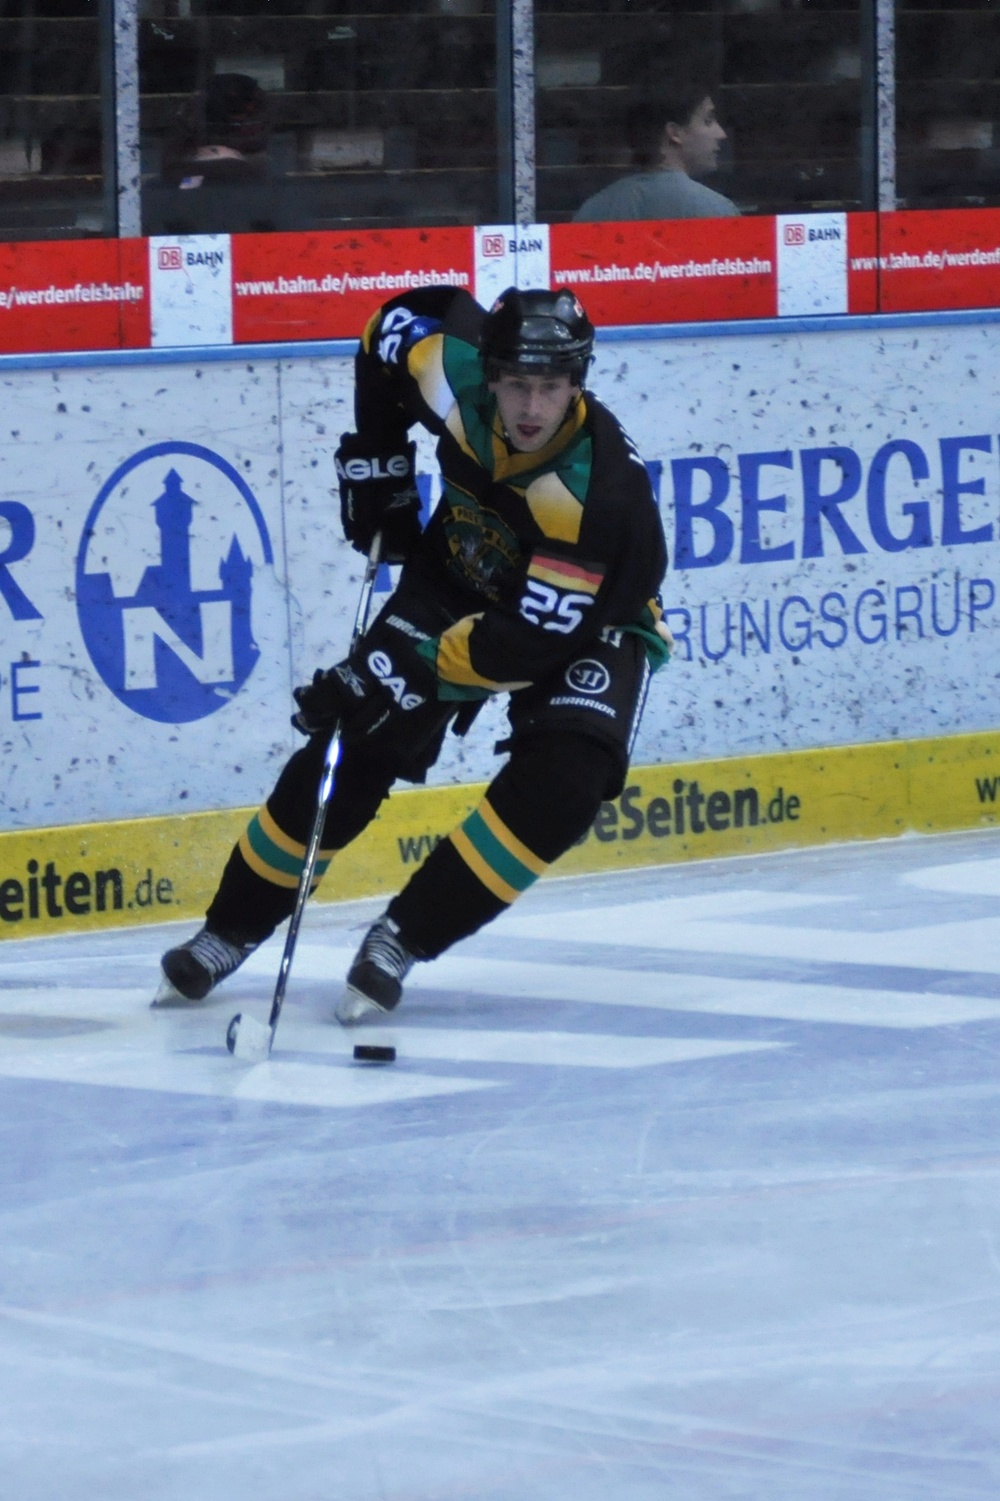 Military hockey teams skate at European tournament